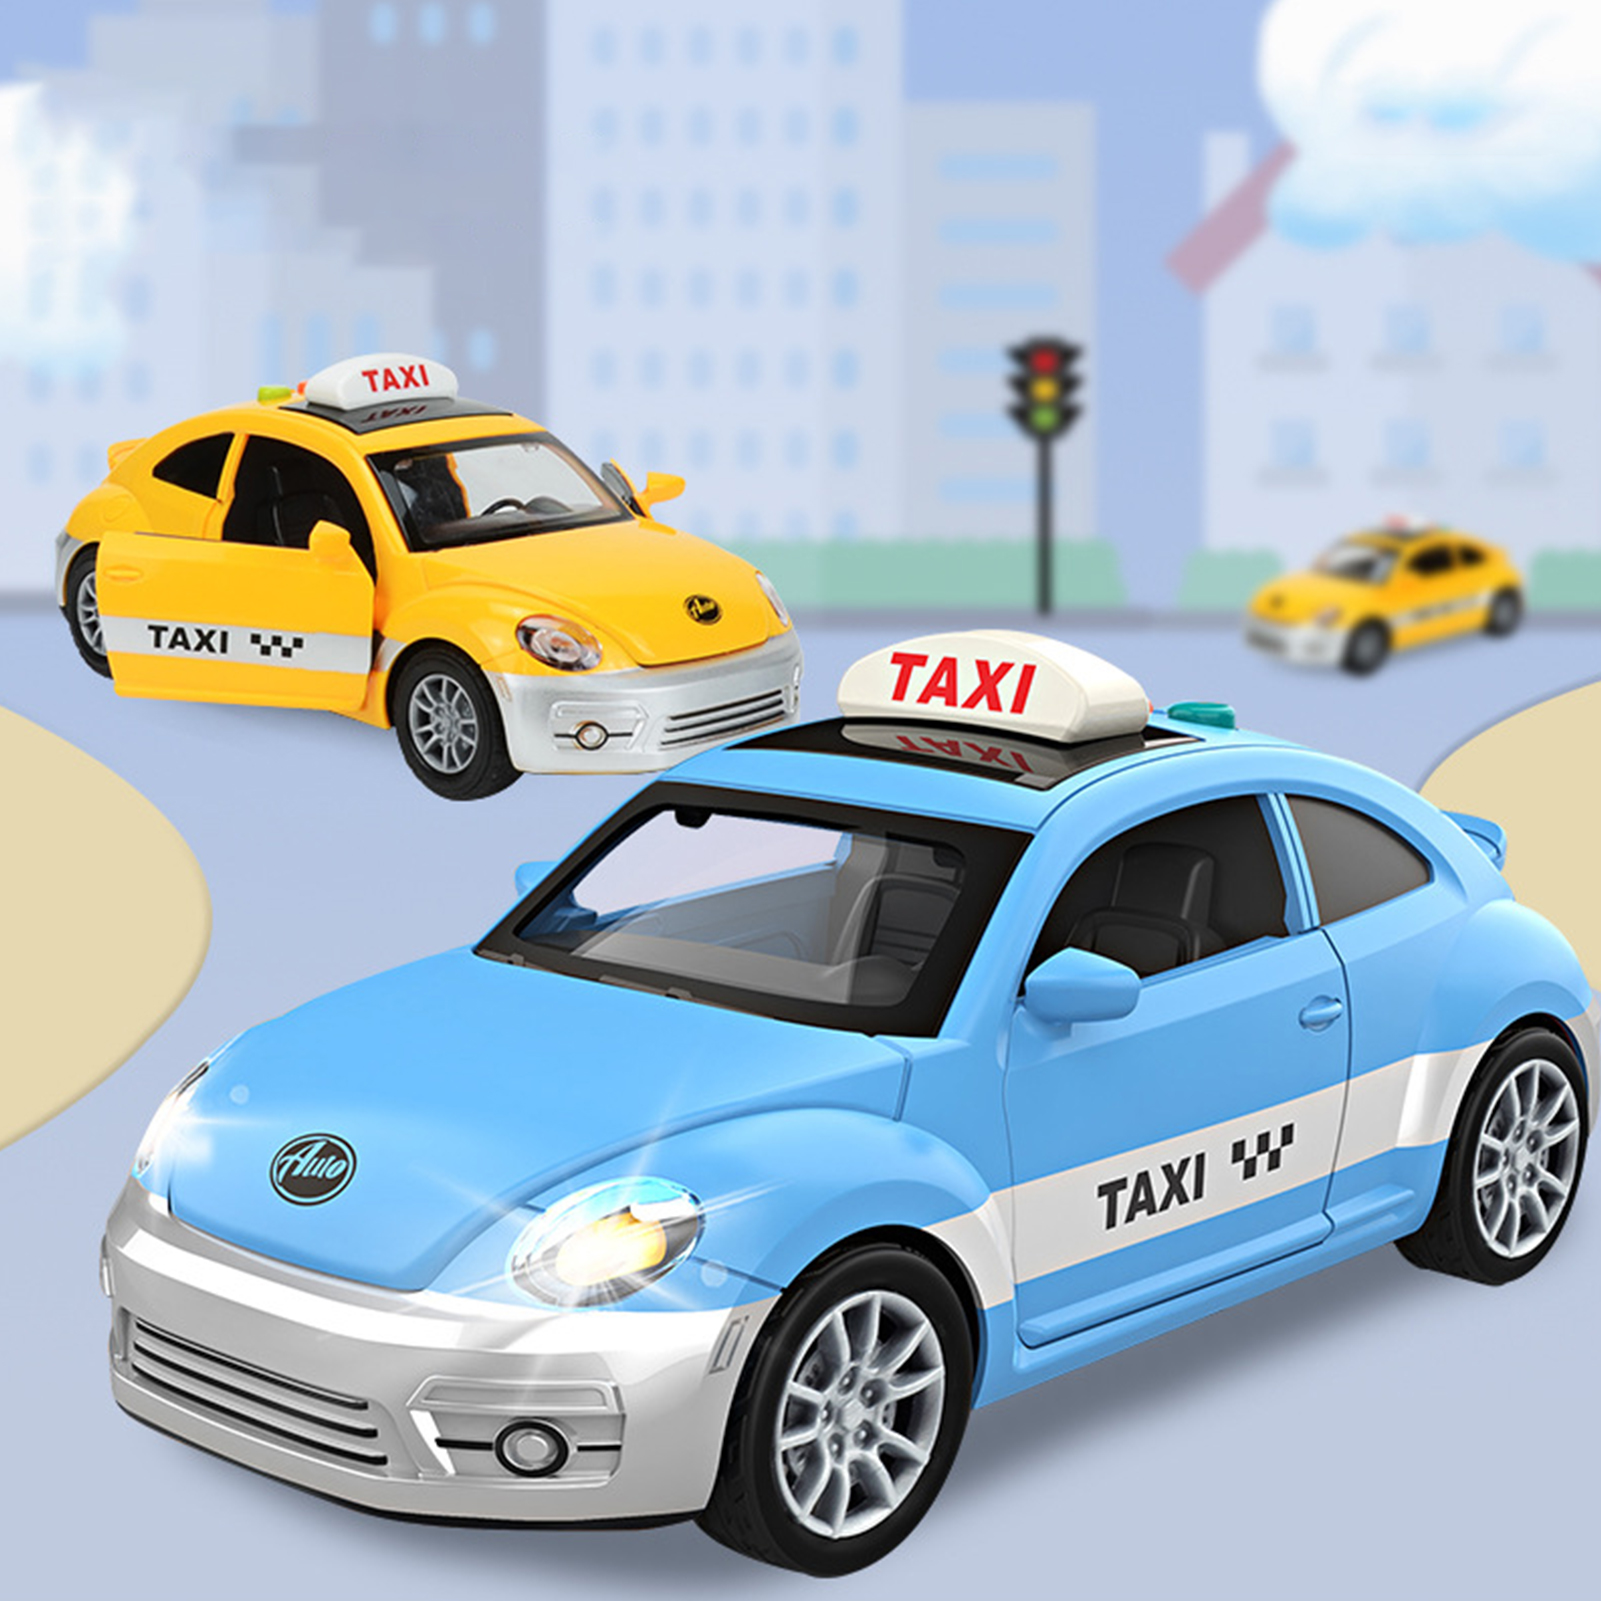 Bianyi Educational Taxi Toy Inertia Taxi Toy Fun and Festive Mini Taxi Toy